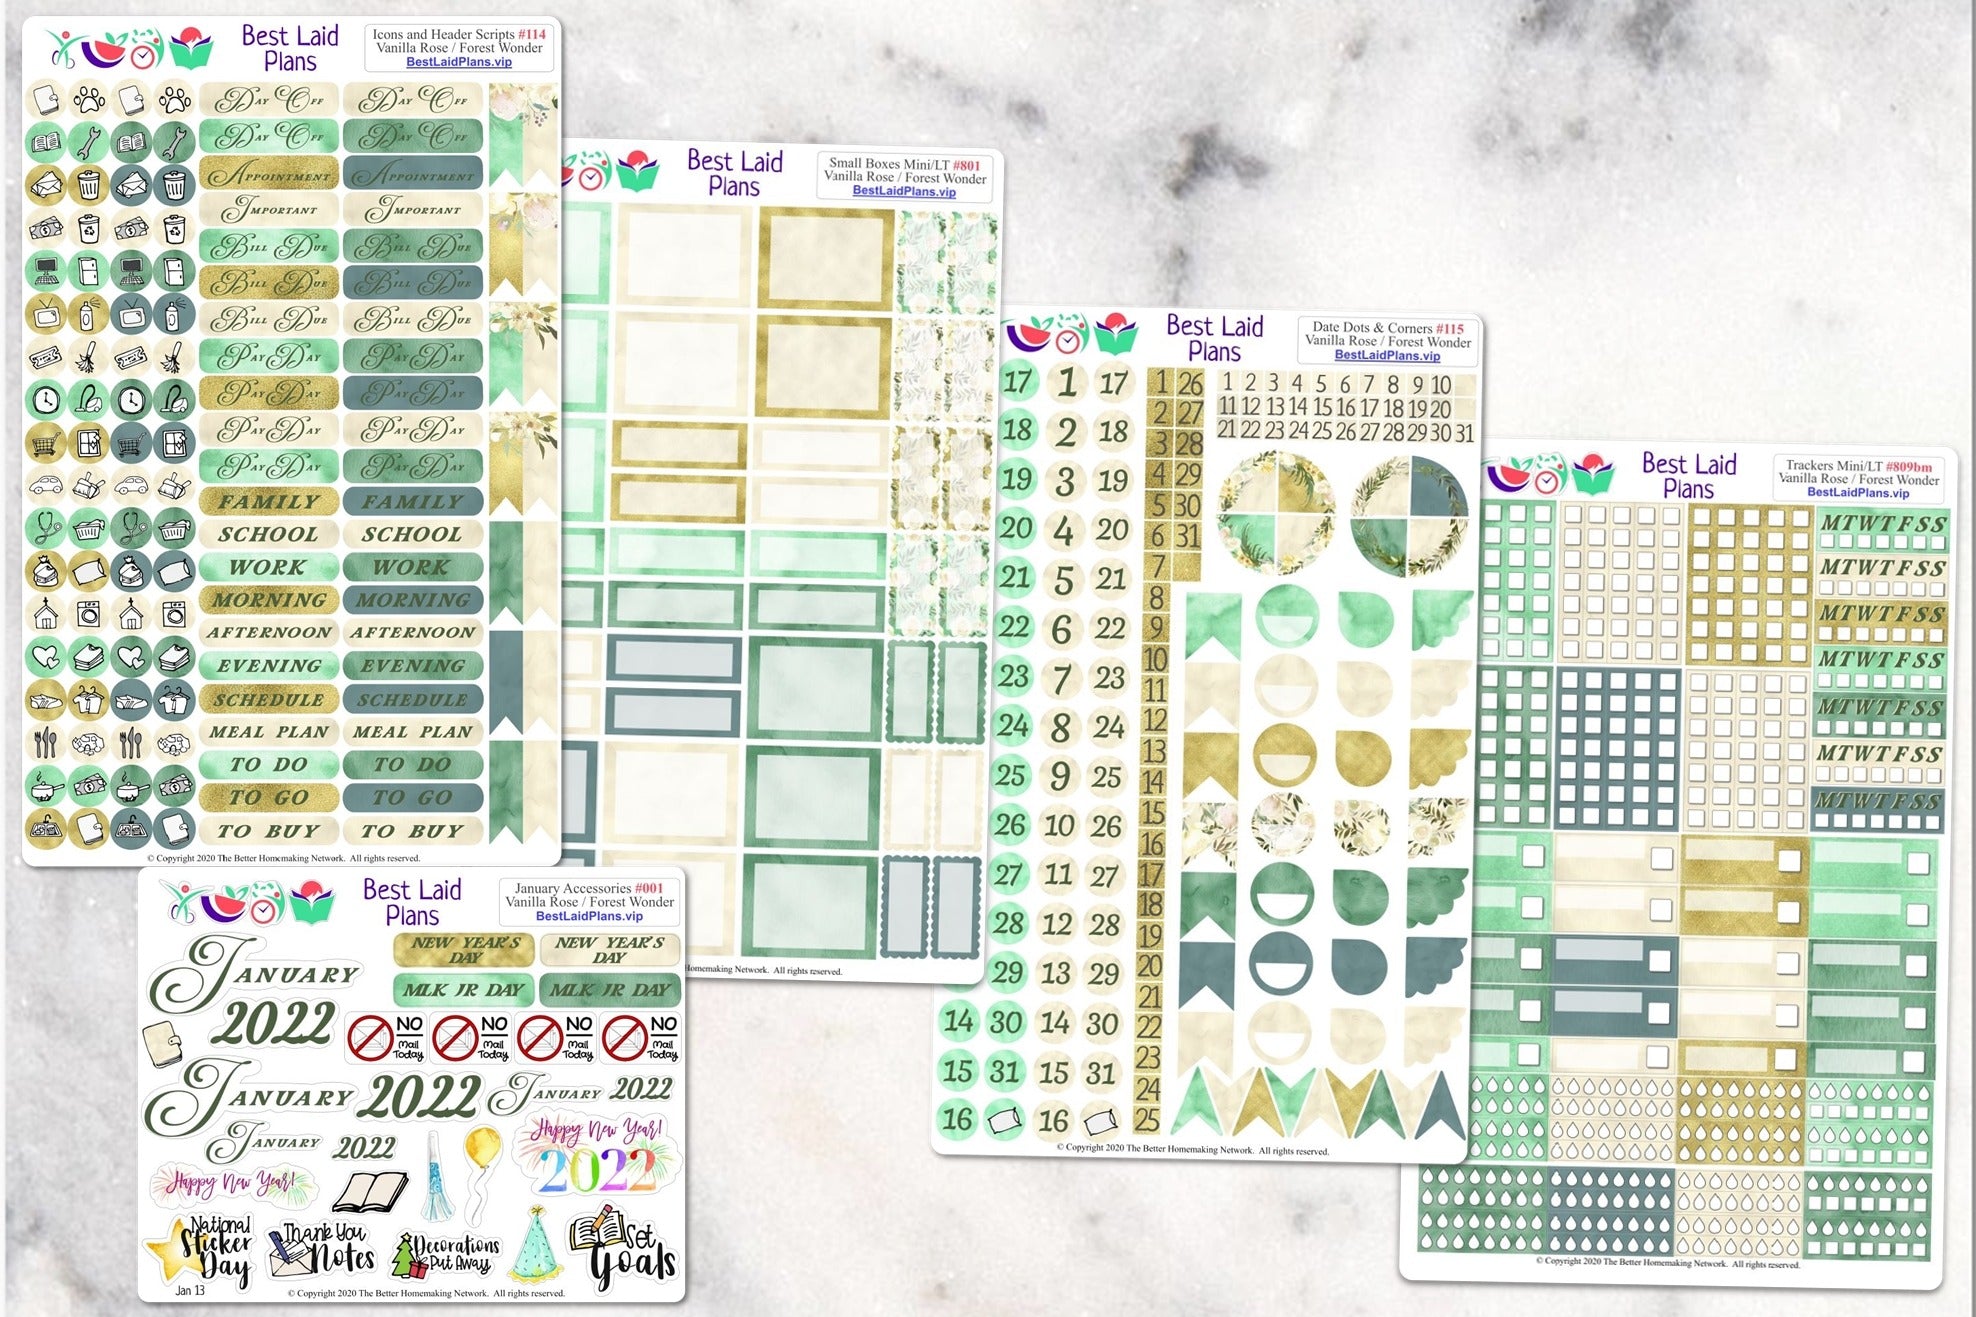 Boho Chic Journal Kit Printable Planner Stickers — Sunflower Child Designs